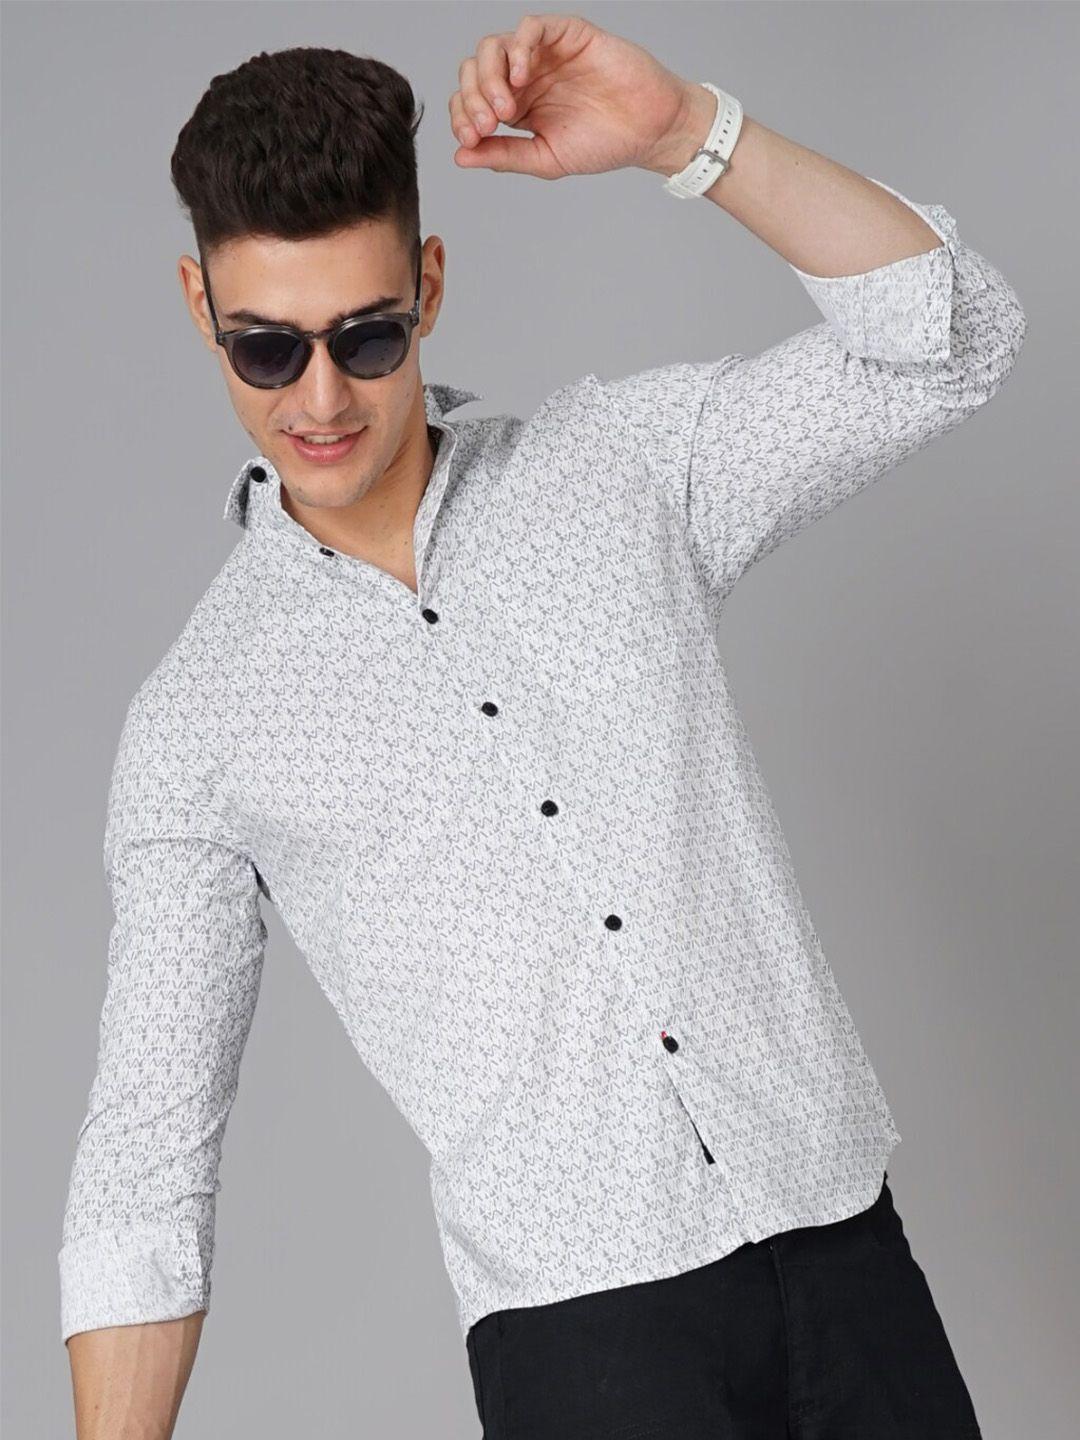 paul street men white standard slim fit opaque printed casual shirt